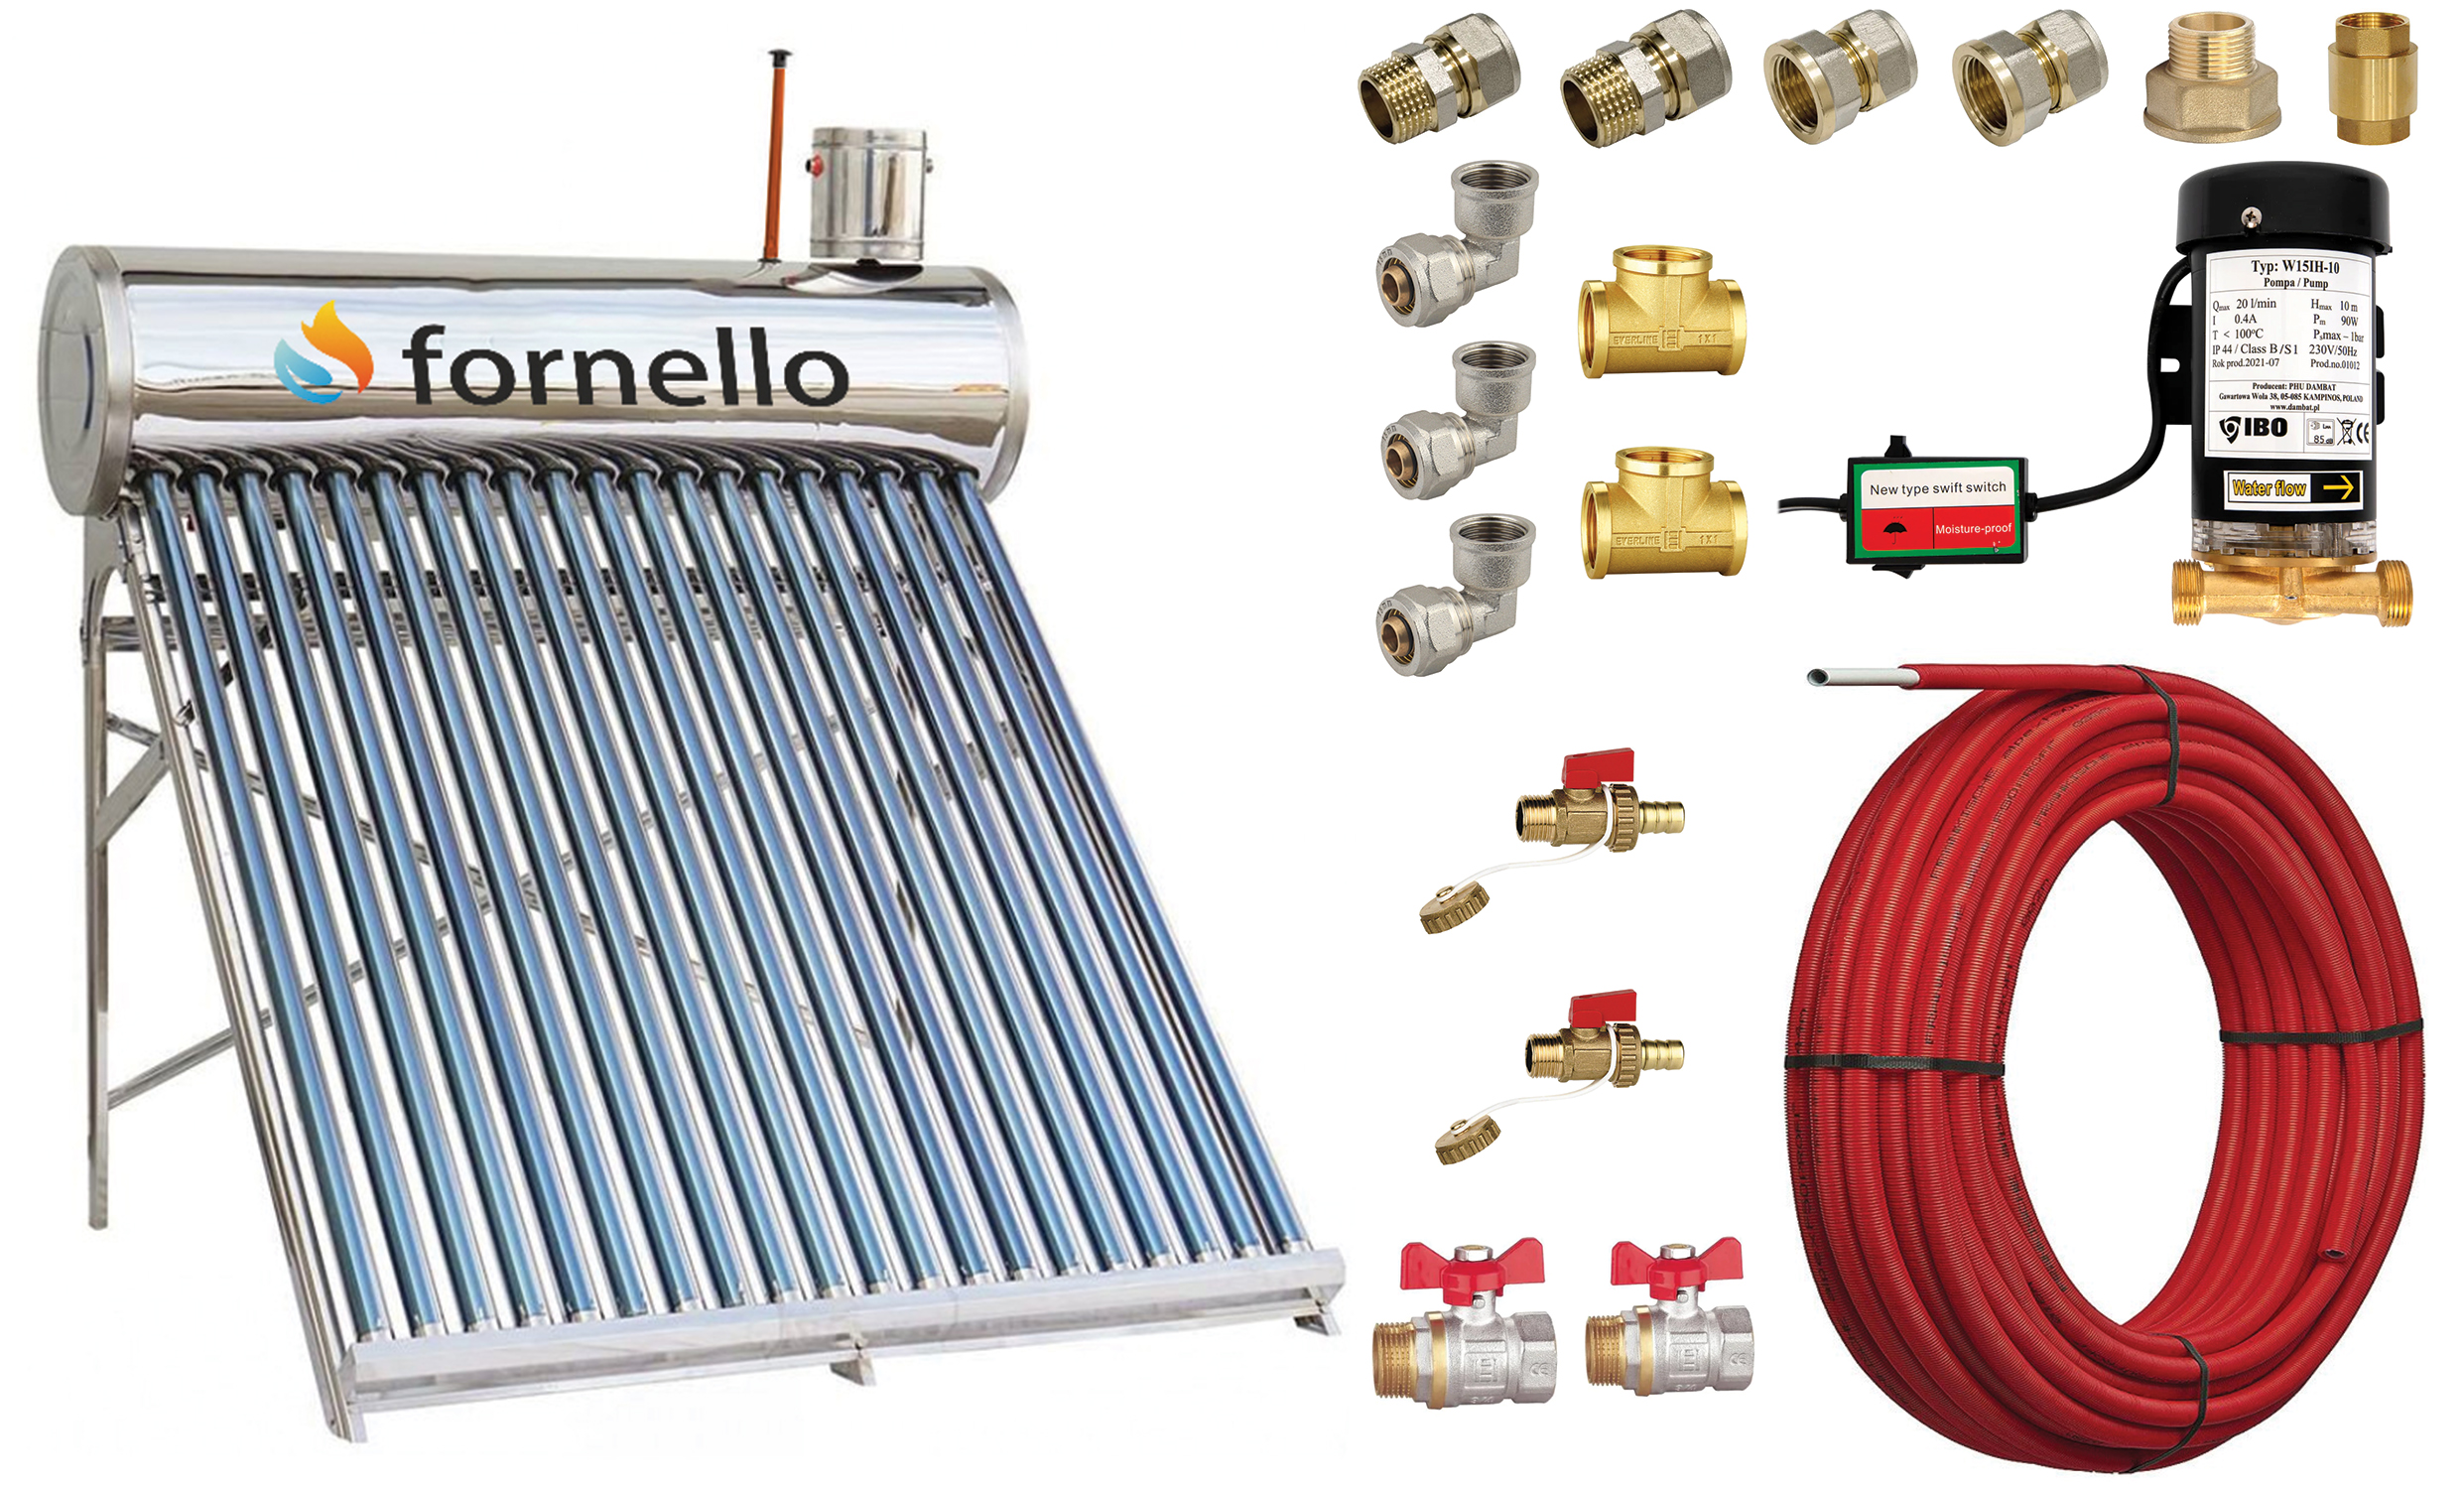 Pachet panou solar nepresurizat Fornello pentru producere apa calda, cu rezervor inox 165 litri, 20 tuburi vidate, vas flotor 5 litri, pompa ridicare presiune, teava hidronix si fitinguri montaj Fornello